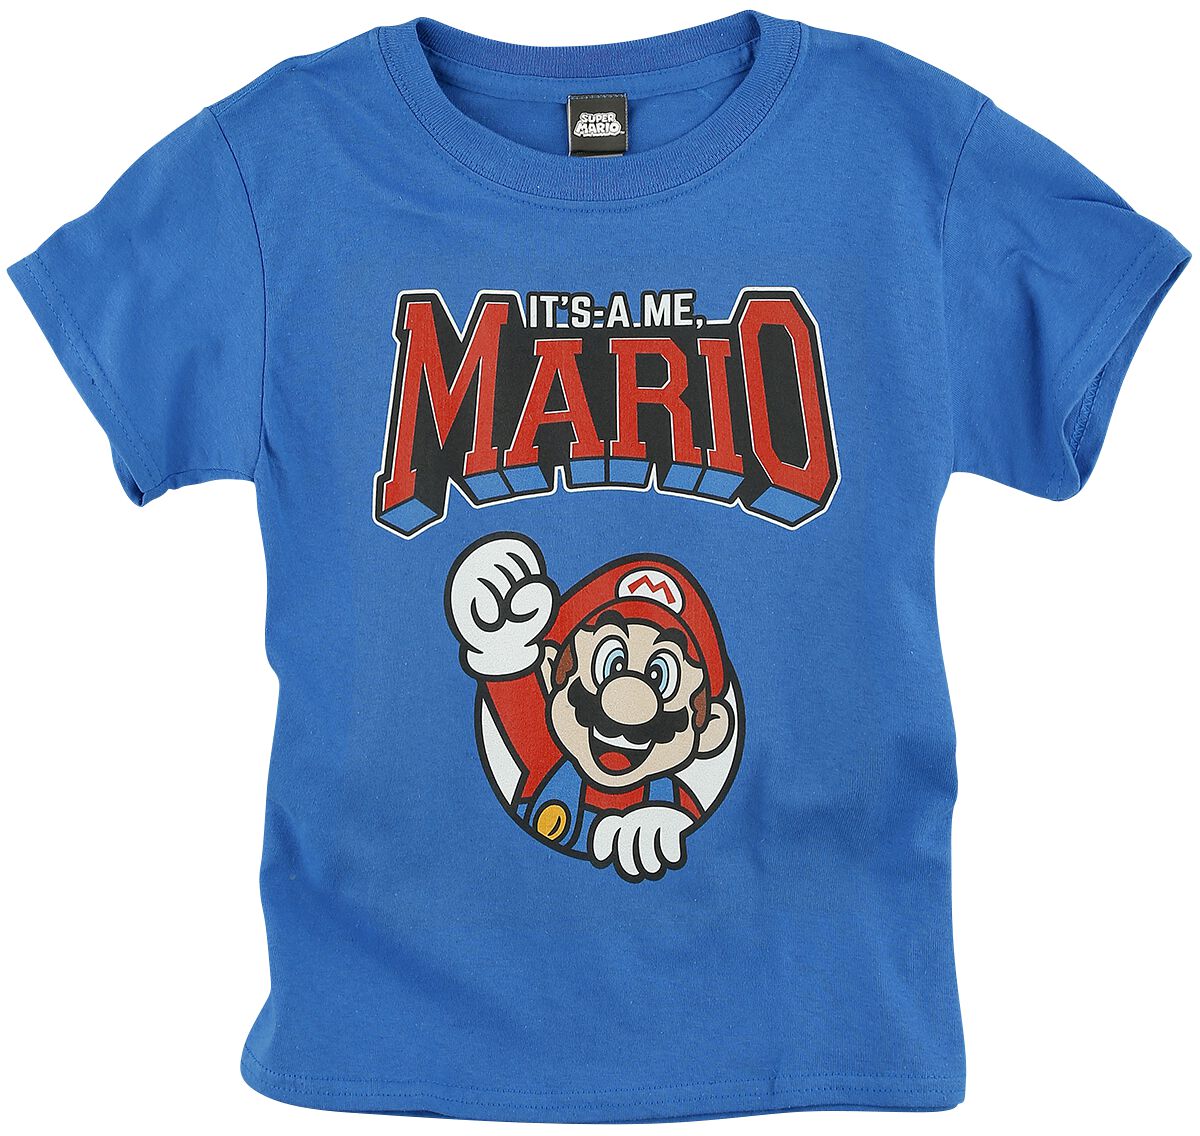 Kids It's A Me Mario T-Shirt blau von Super Mario